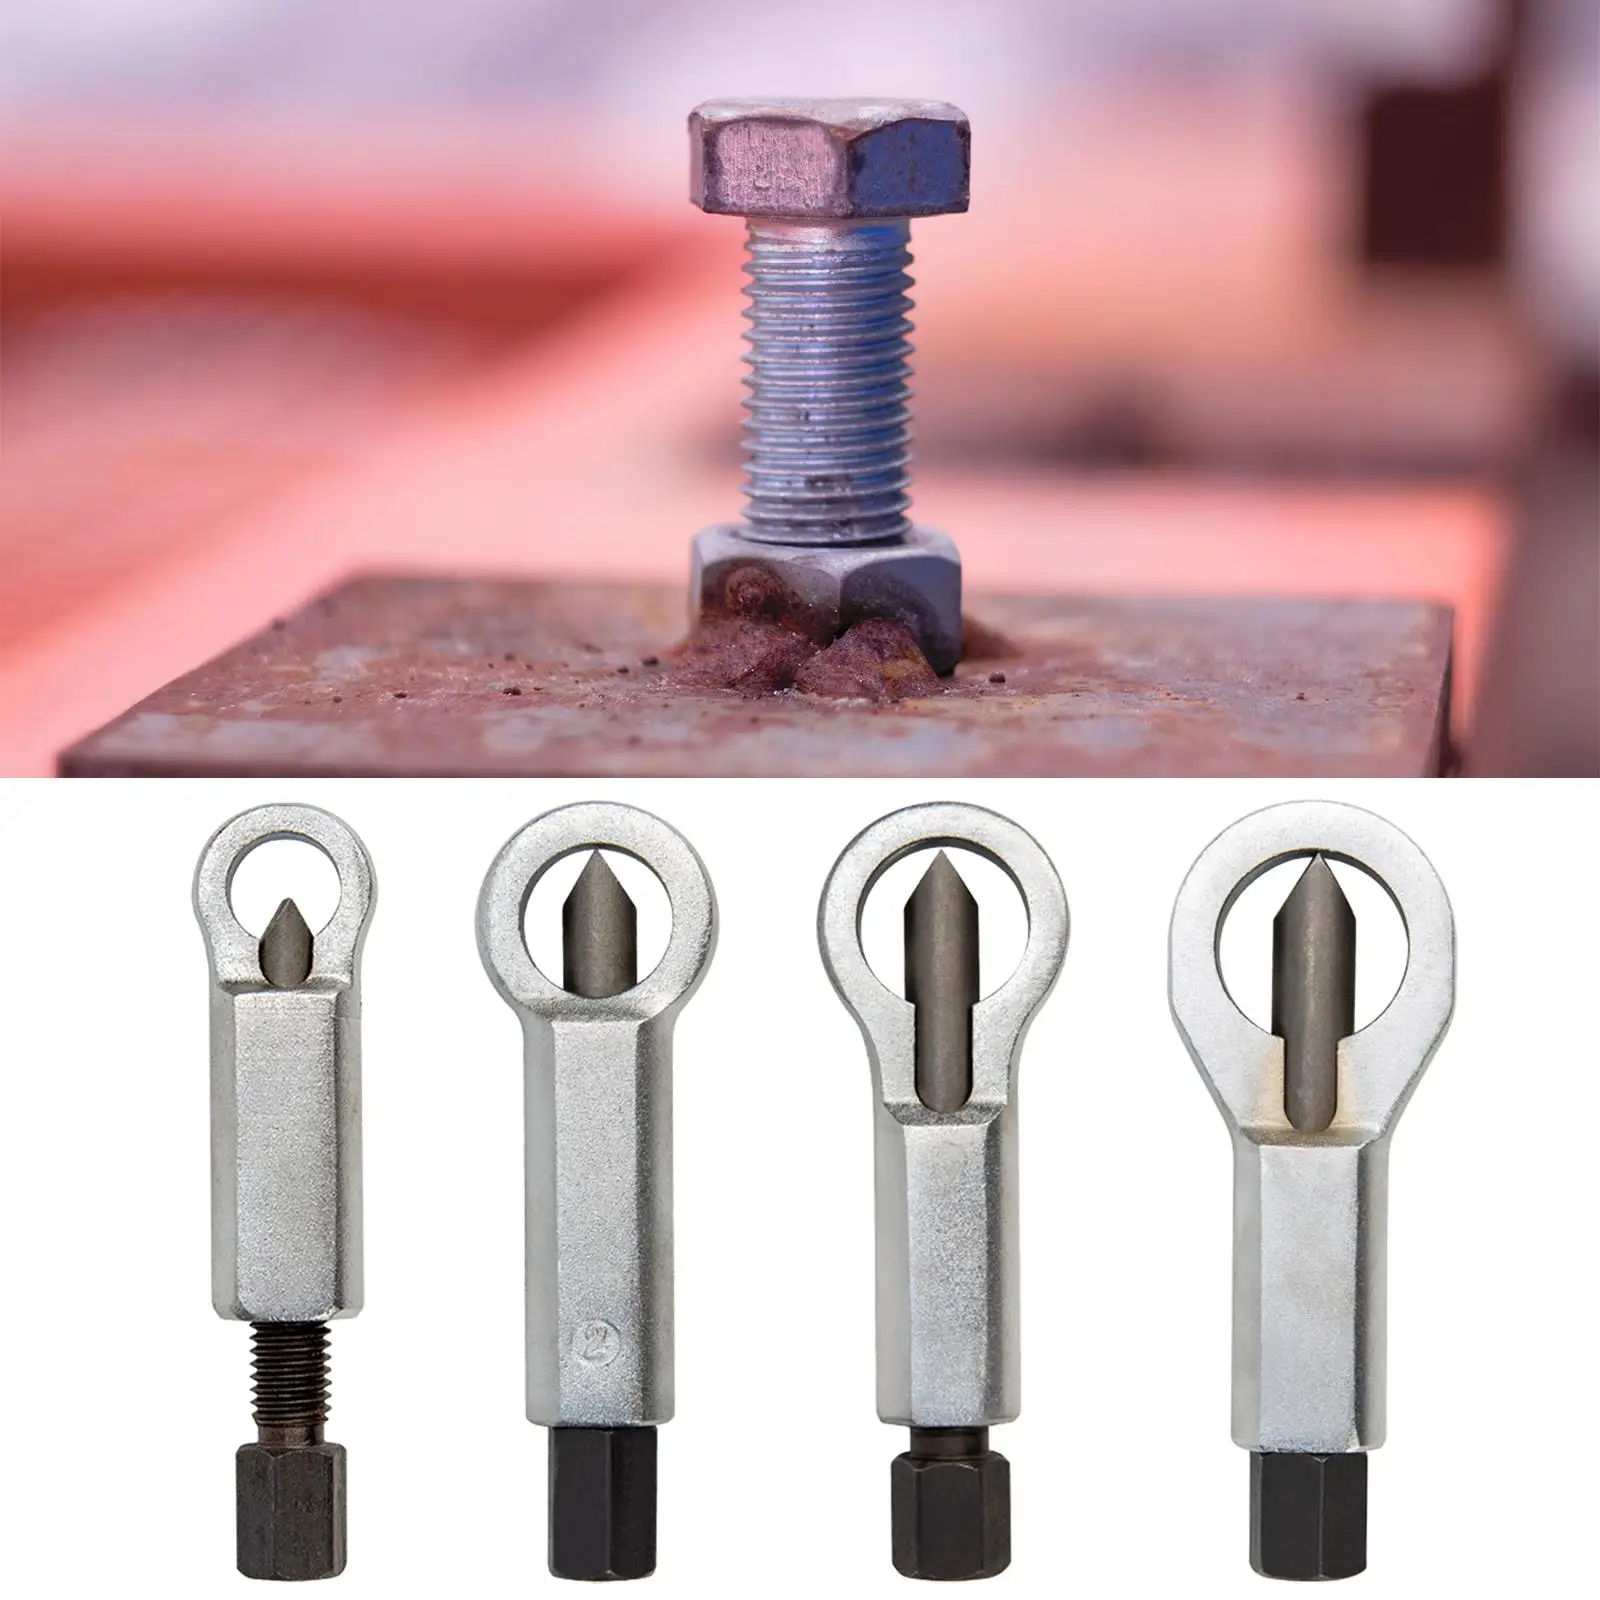 Manual Pressure Nut Remover Remover Extractor Tool Metal Nut Splitter Remover for Damaged Nuts Home Workshop Removing Broken